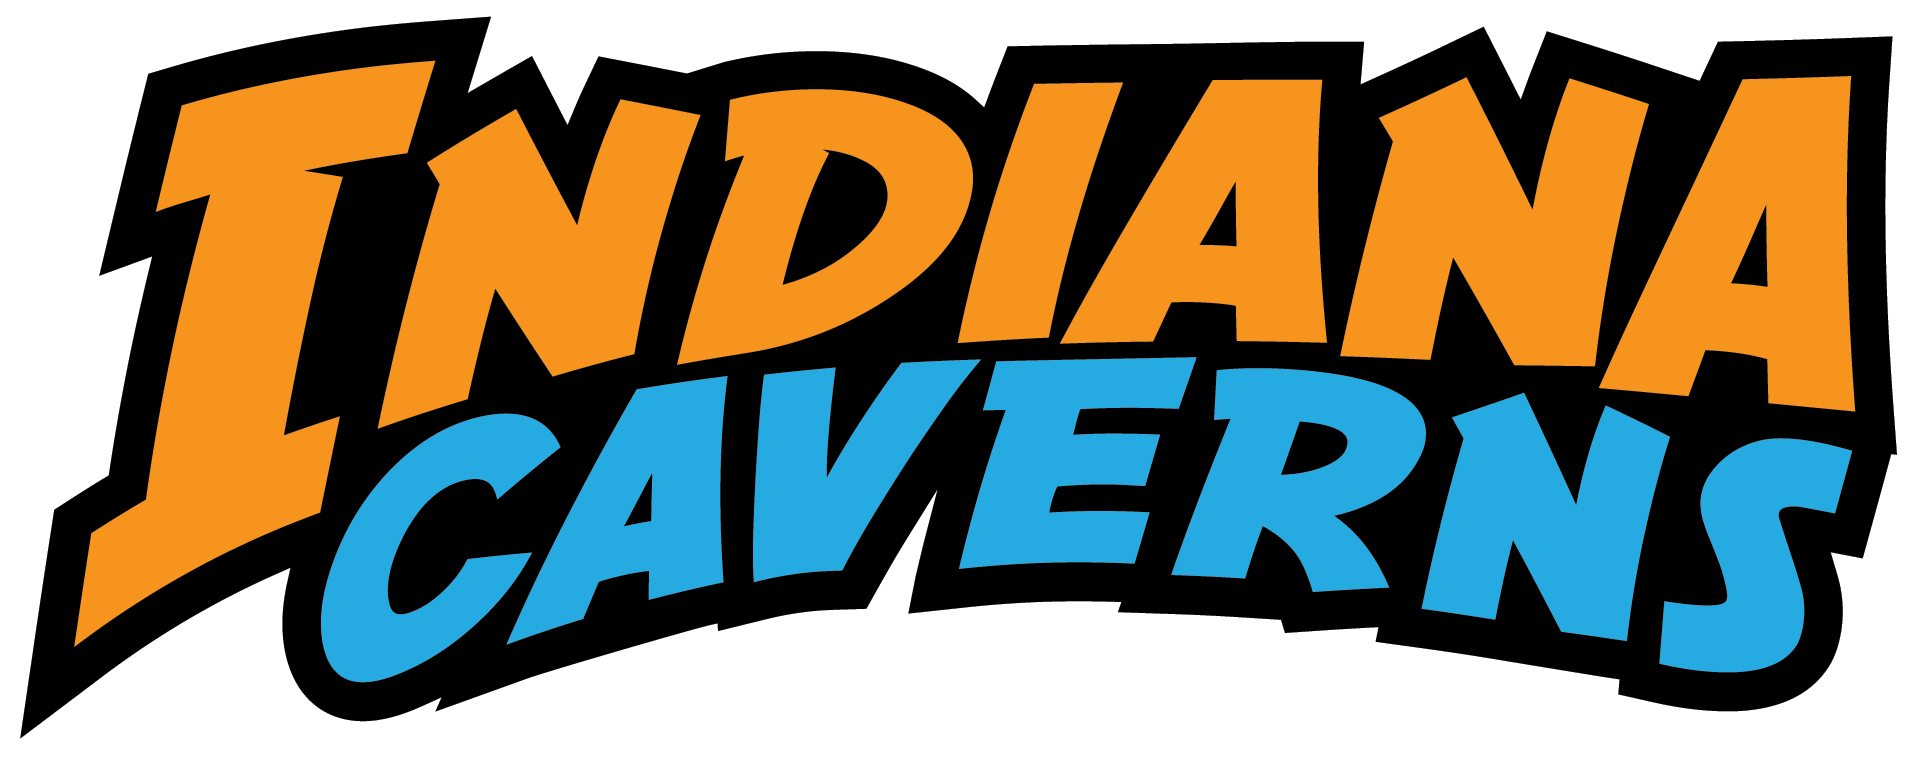 Indiana Caverns Logo - Indiana Caverns (1913x773)